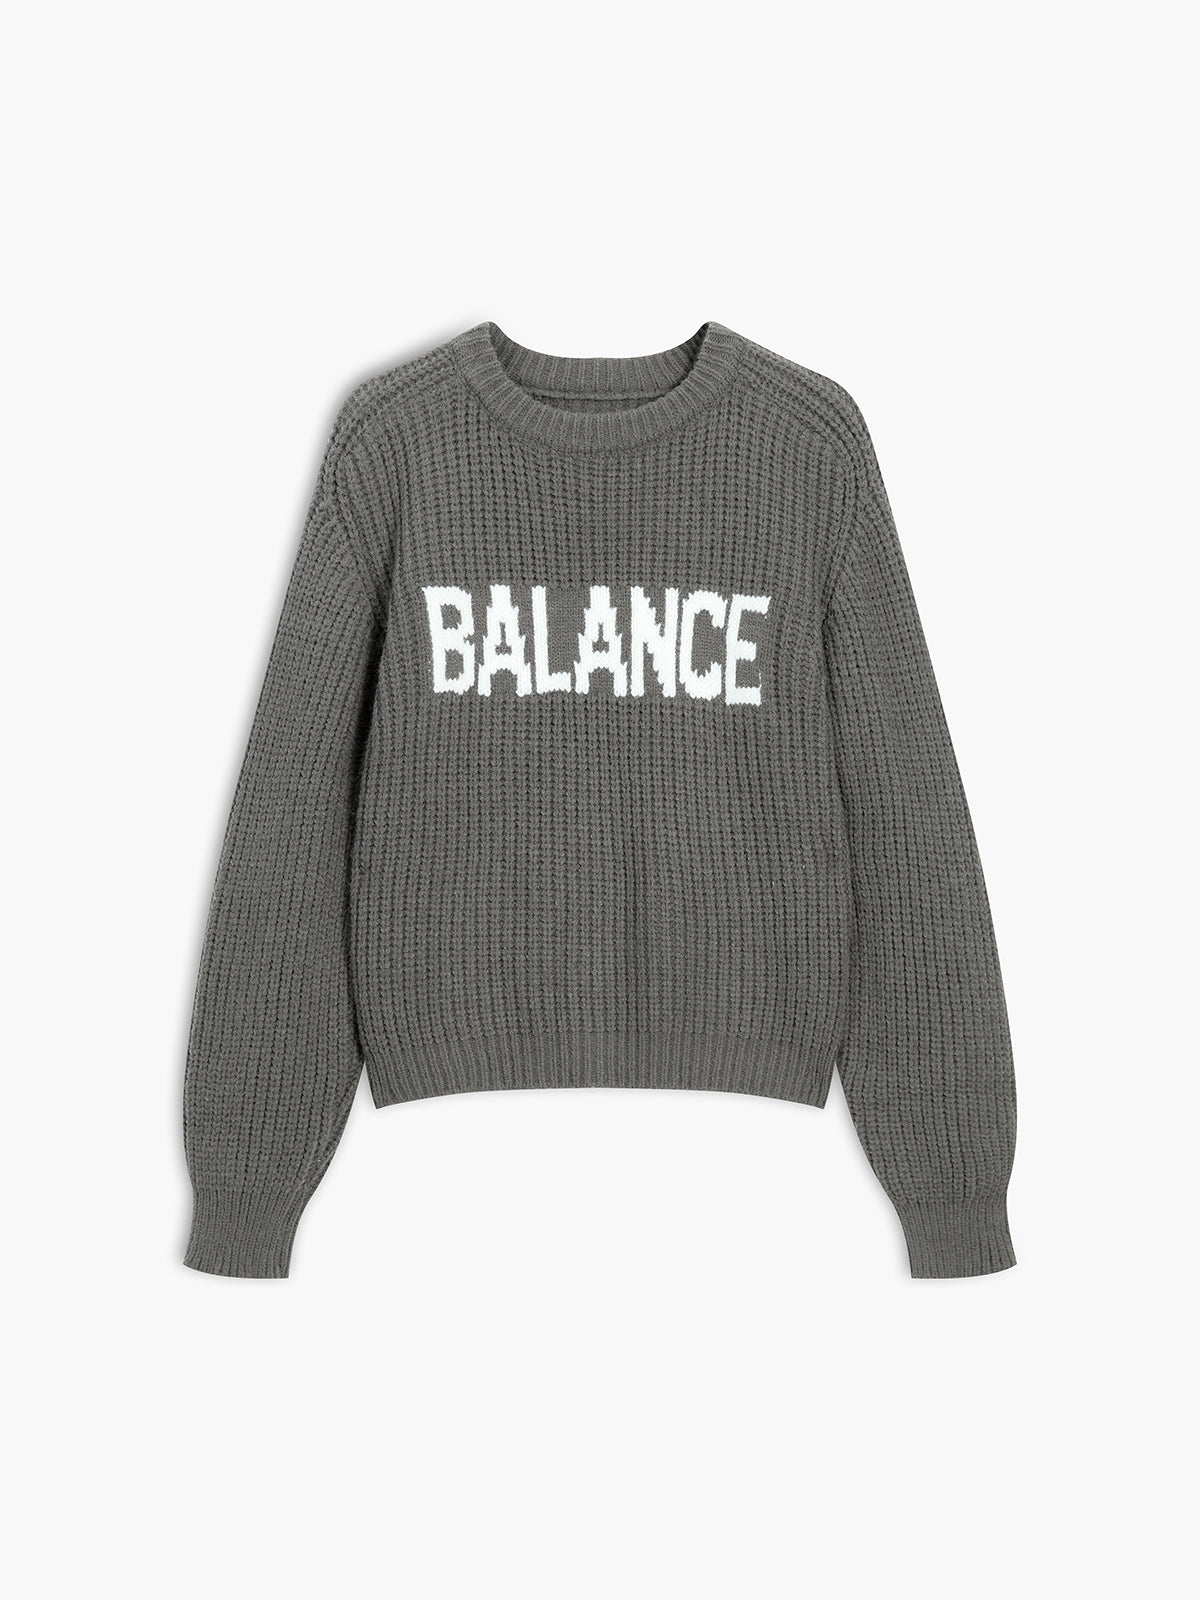 Work Life Balance Sweater